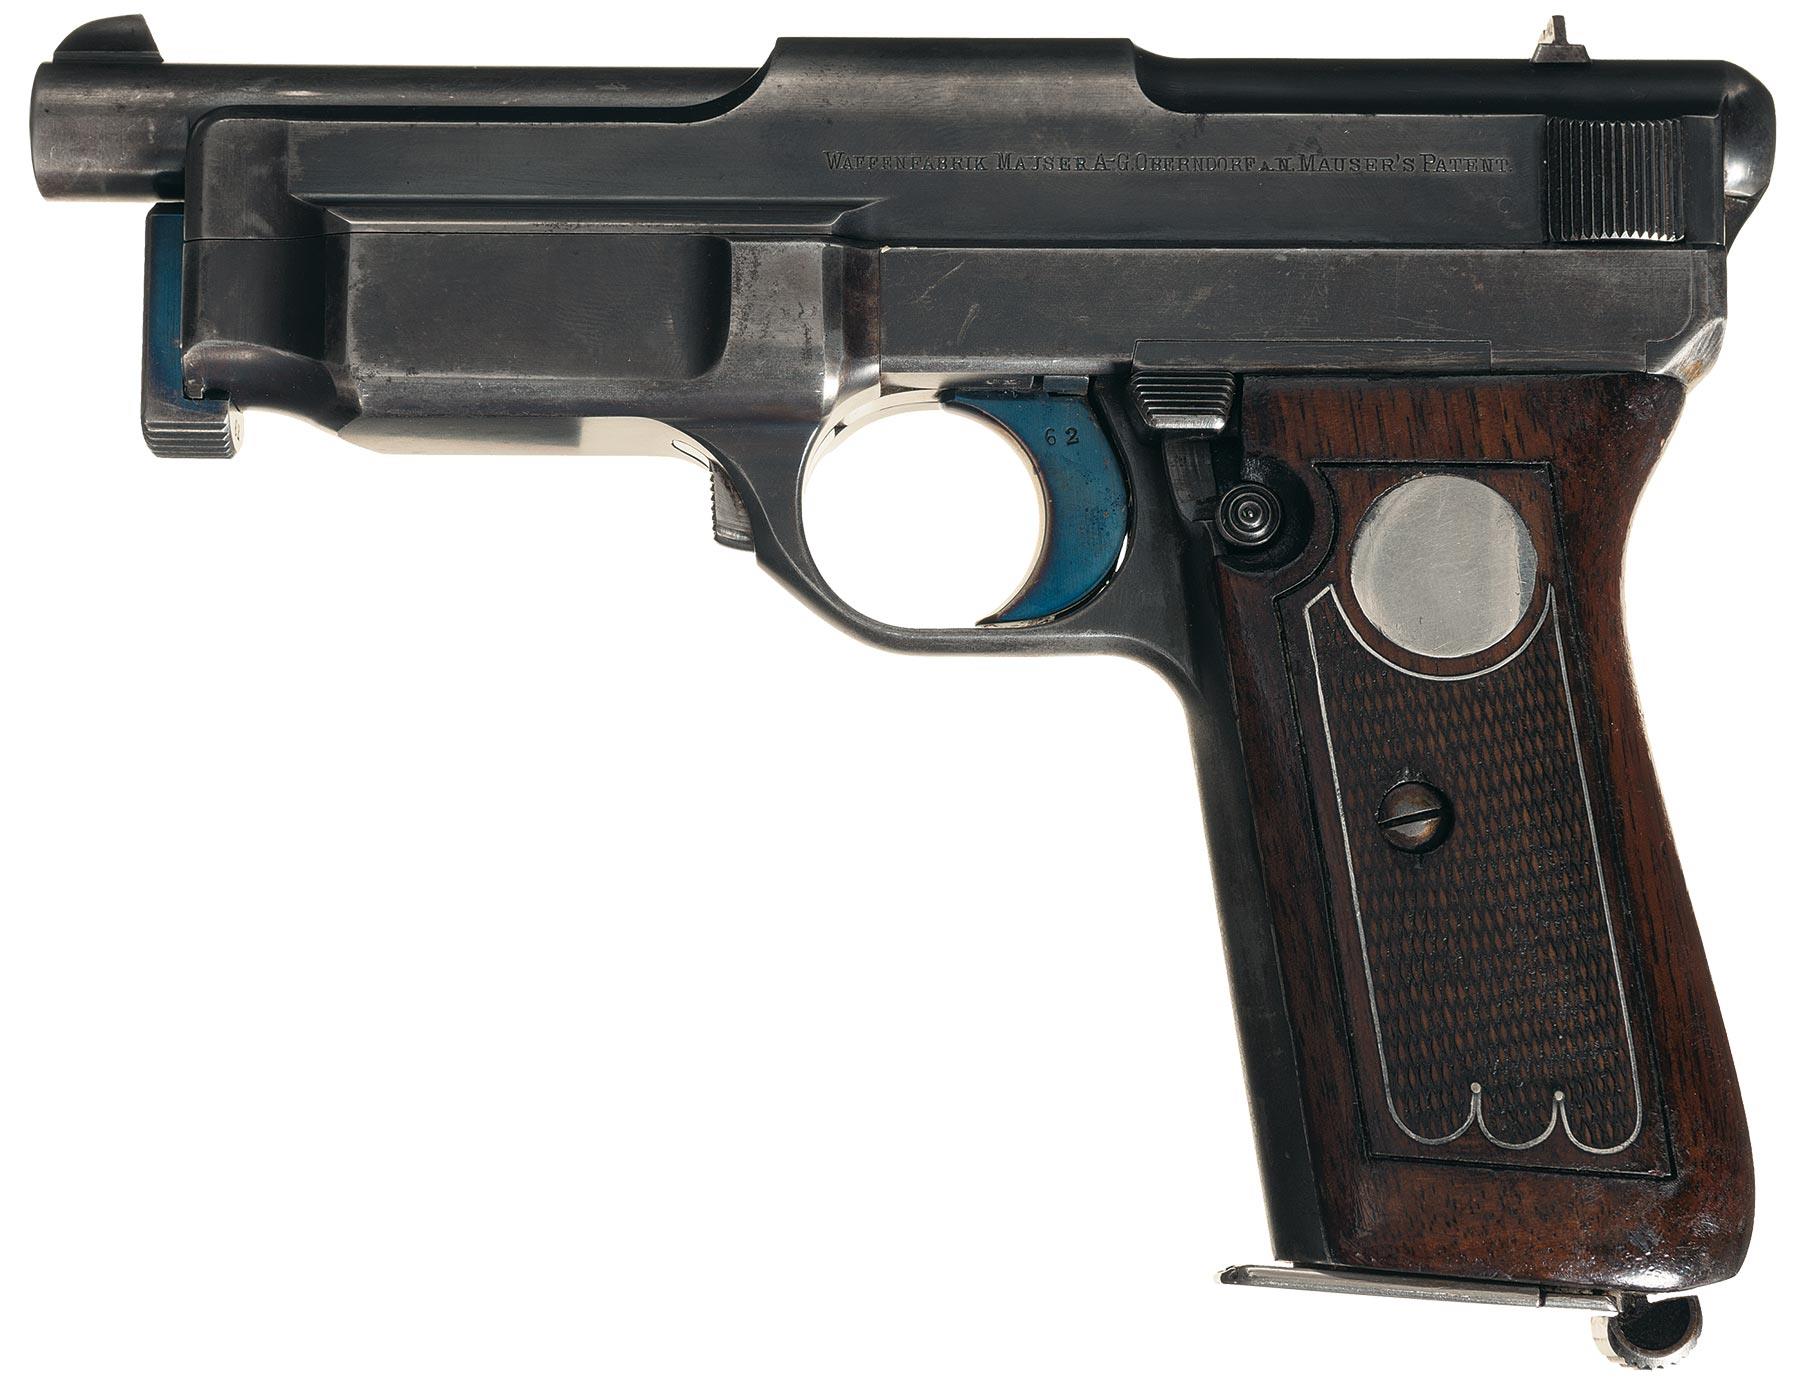 Mauser 32 pistol serial numbers